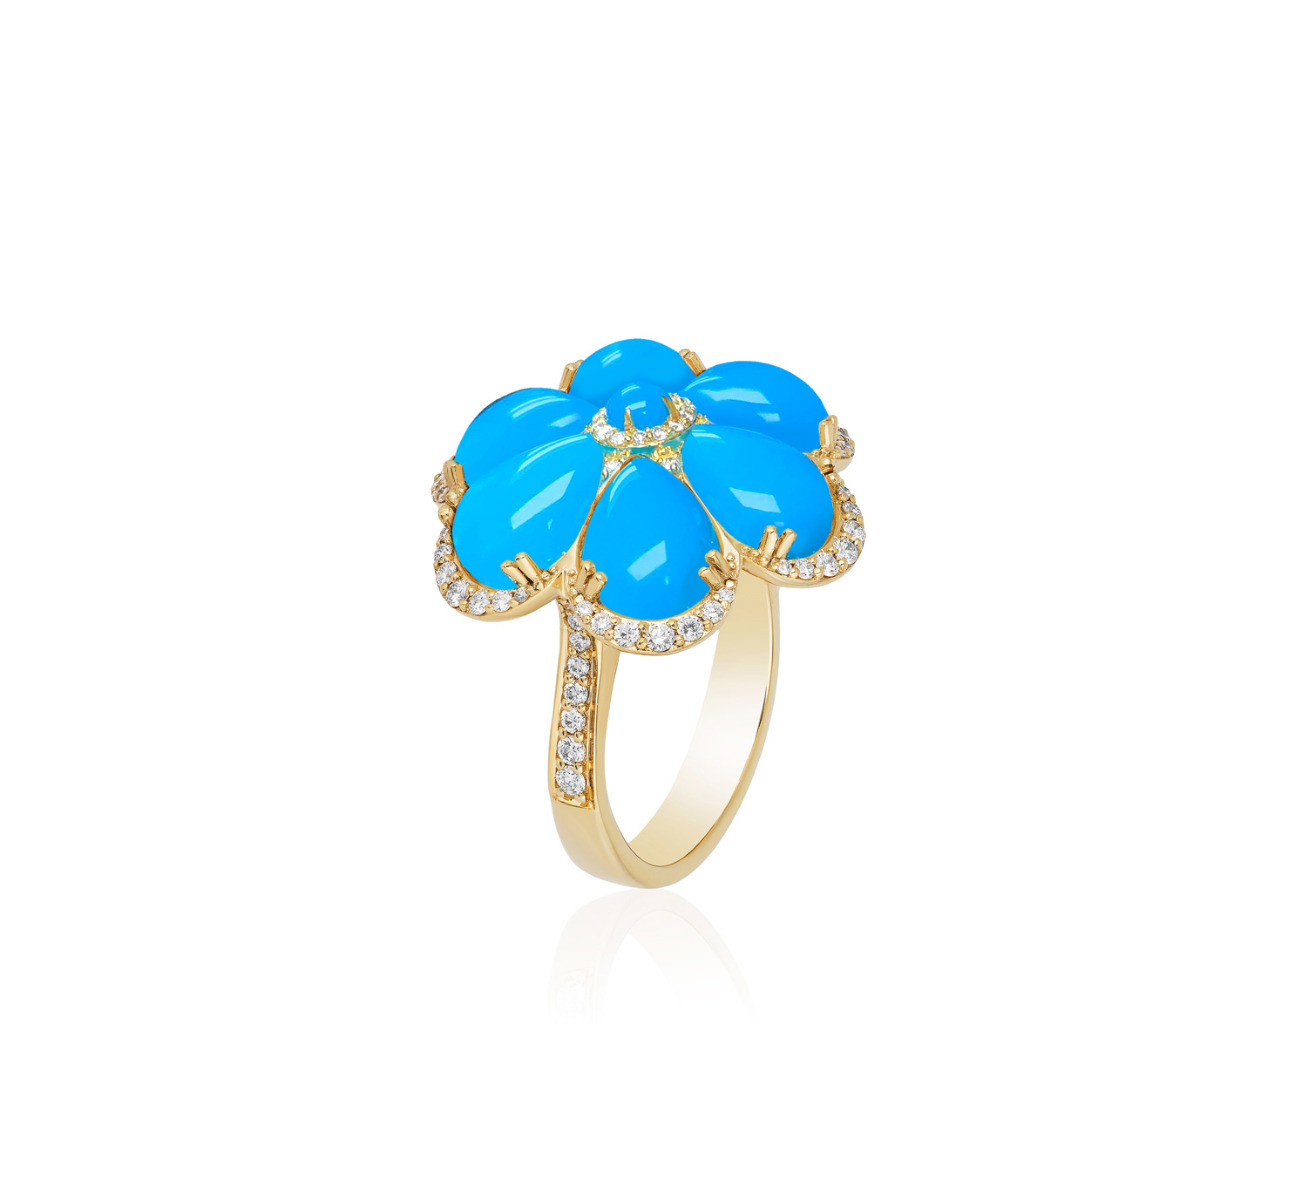 Goshwara "G-One" Turquoise & Diamond Flower Ring in 18kt Yellow Gold